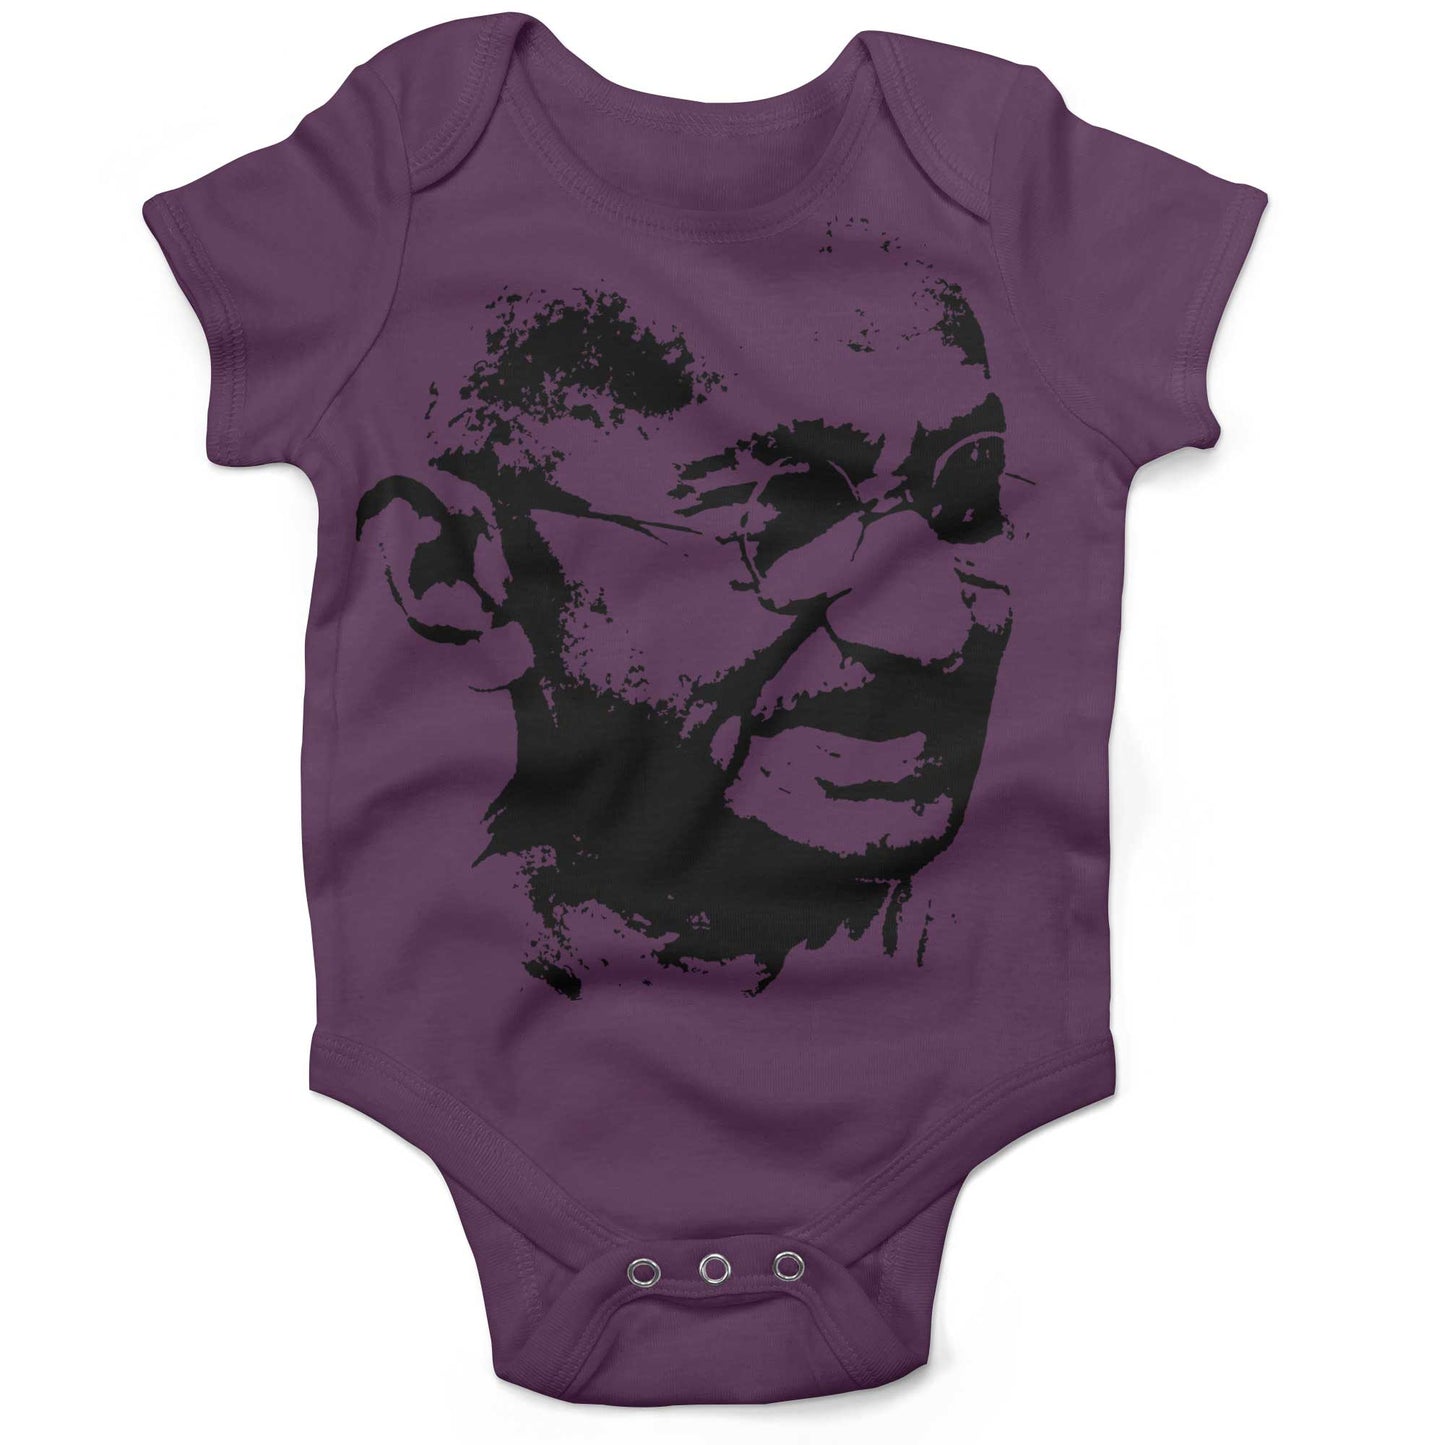 Mahatma Gandhi Be The Change Infant Bodysuit or Raglan Baby Tee-Organic Purple-3-6 months